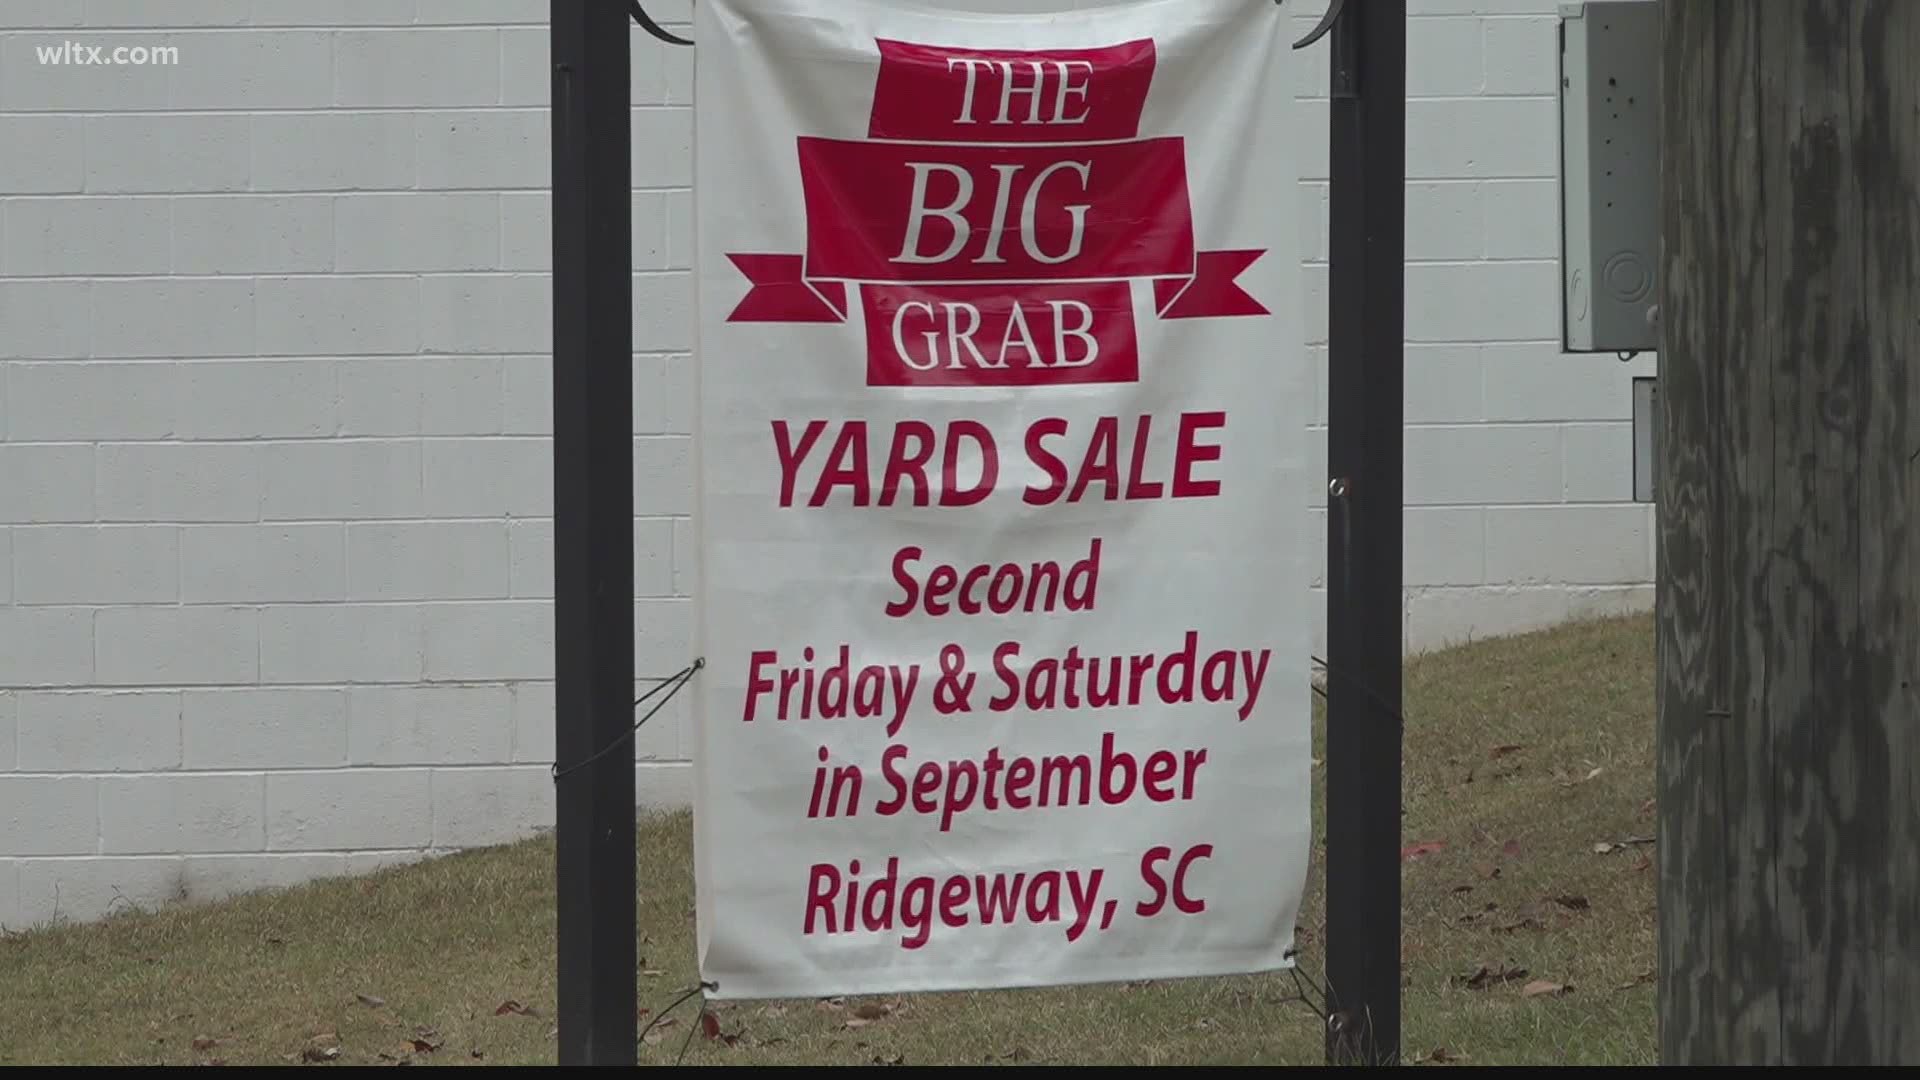 The Big Grab Yard Sale spans Blythewood, Winnsboro and Ridgeway